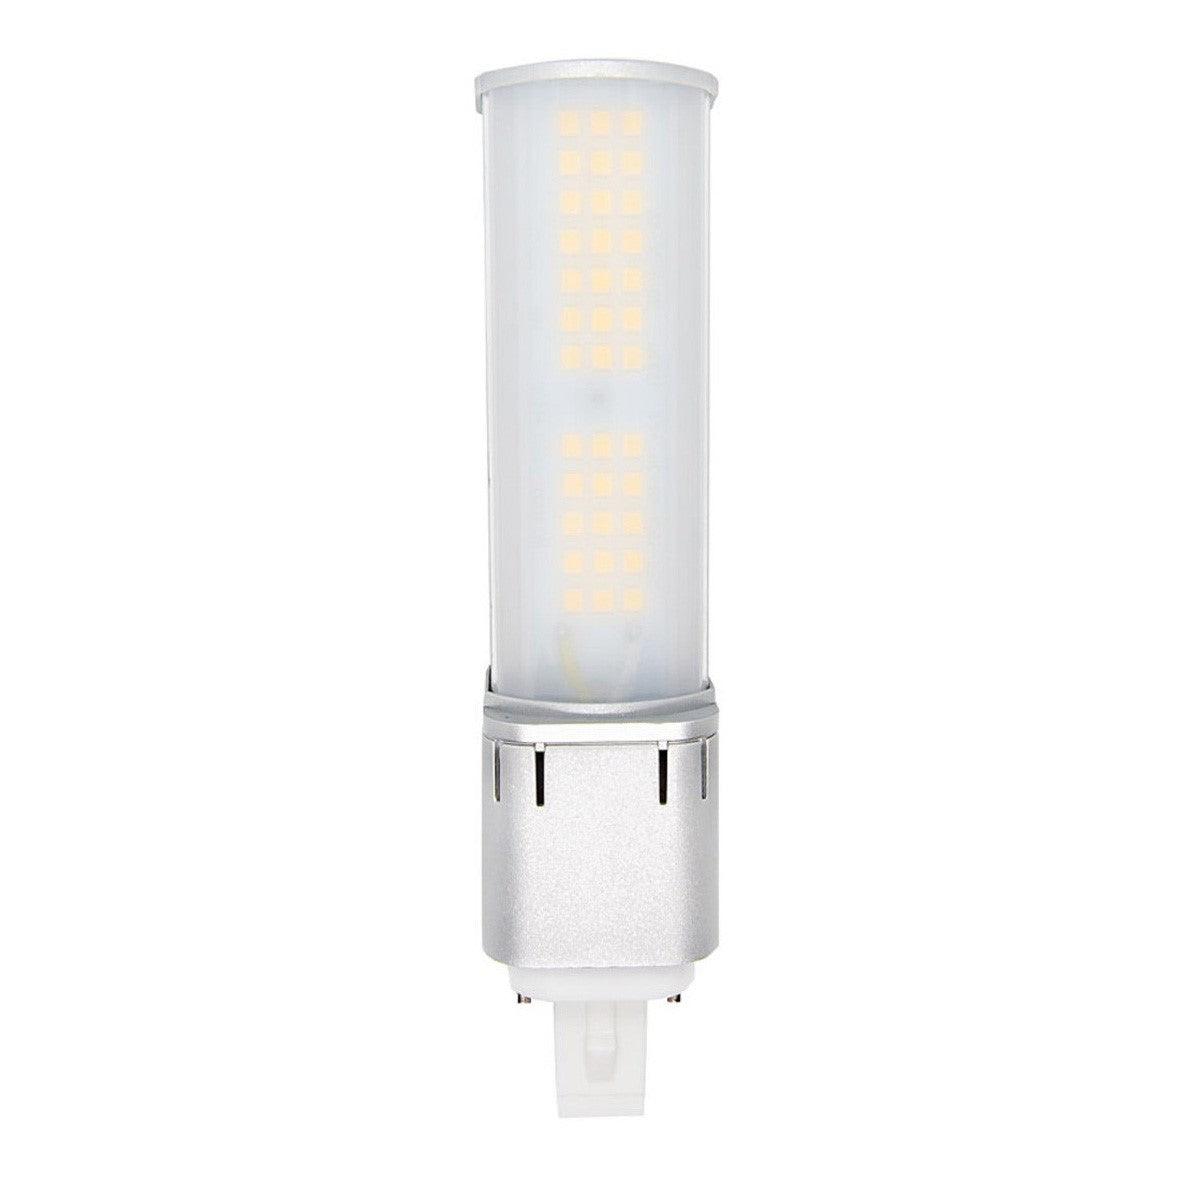 2 pin PL LED Bulb, 7 Watt 910 Lumens, 4000K, Horizontal, Replaces 13W CFL, G23 Base, Direct Or Bypass - Bees Lighting